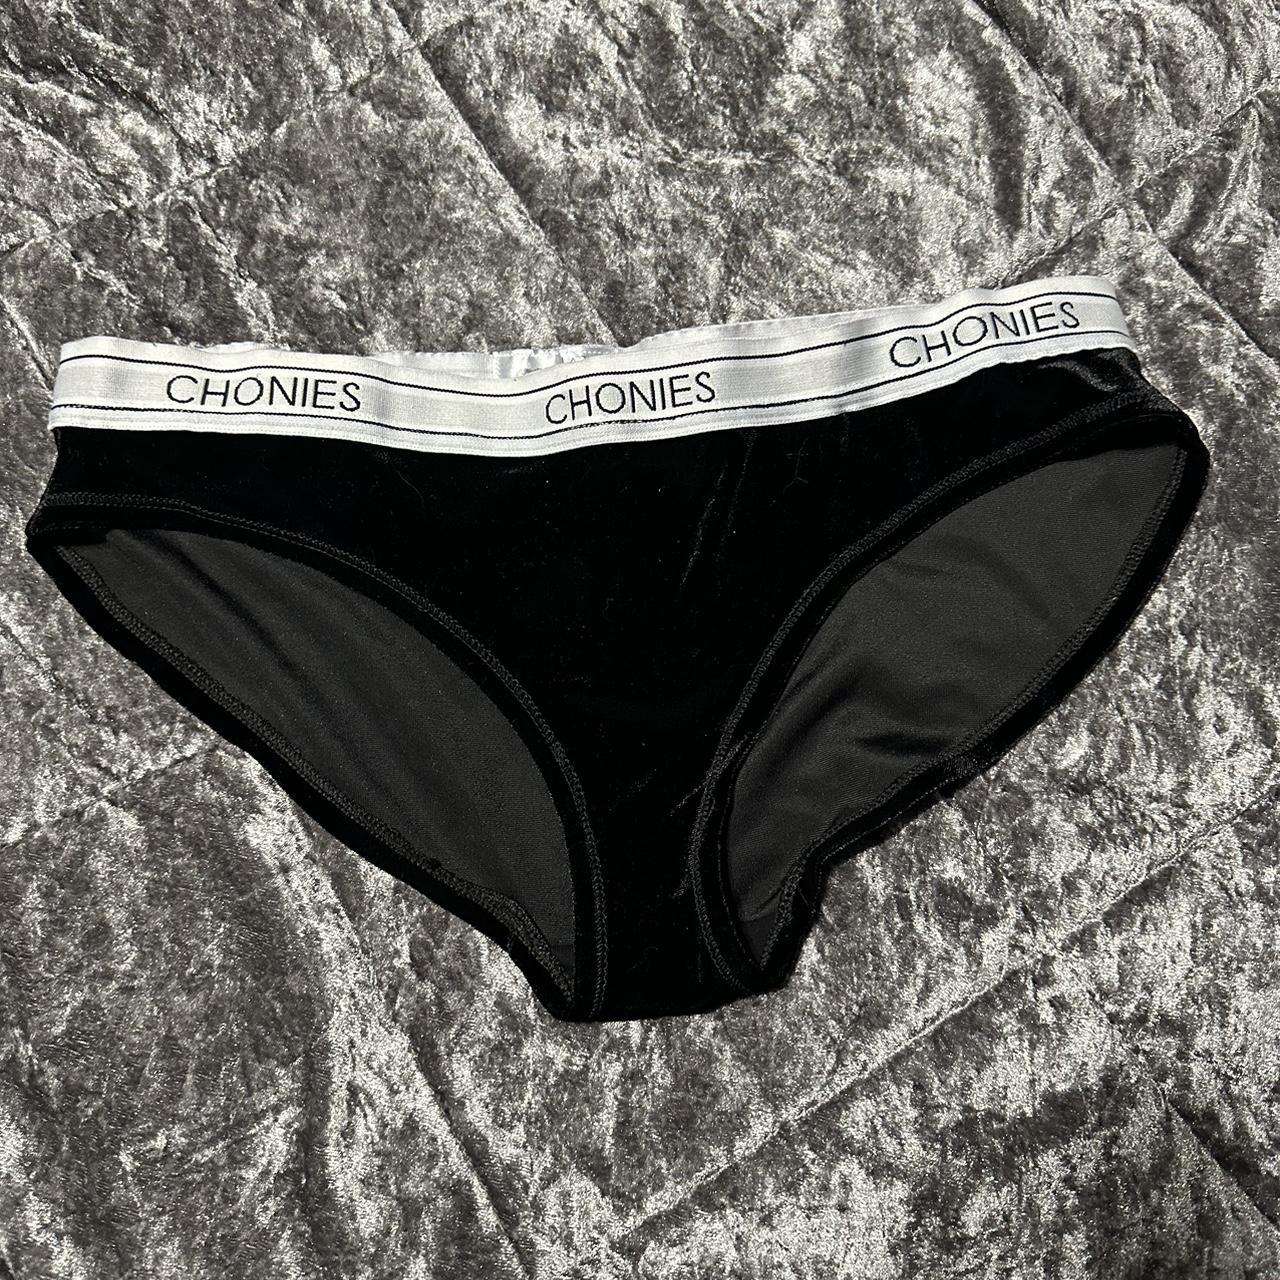 Chonies savage panties | Size L | Never worn